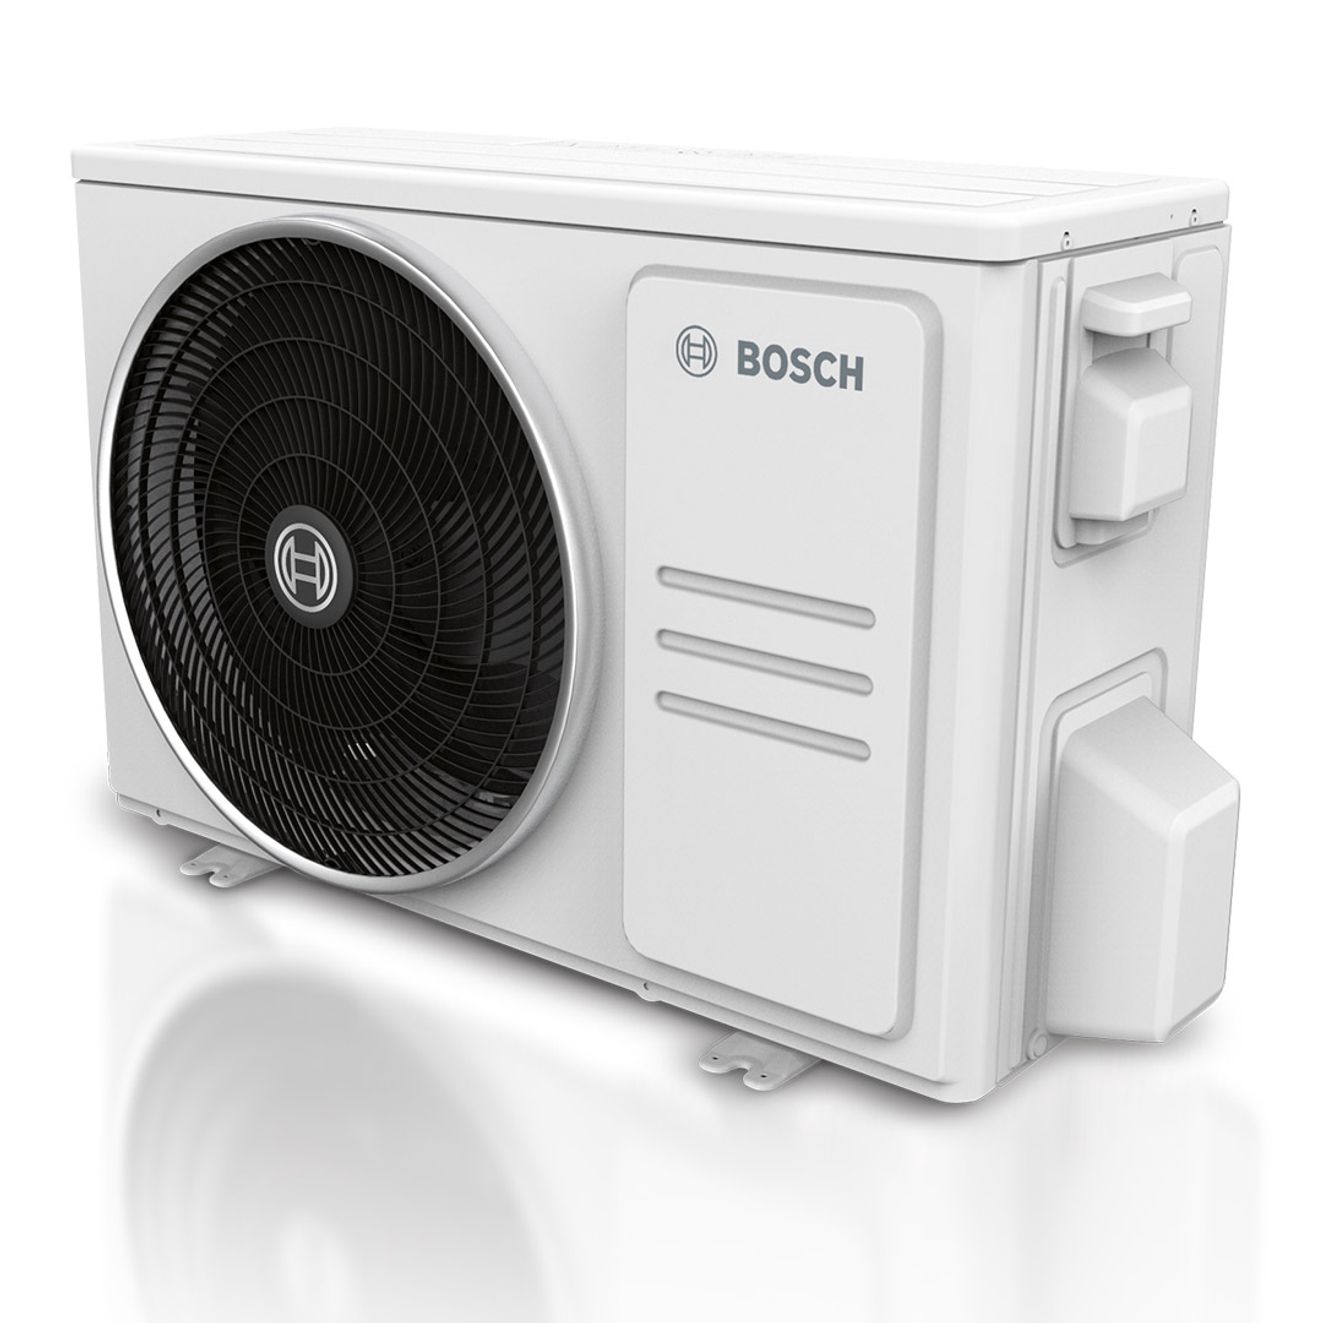 Кондиционер сплит-система Bosch Climate CL3000i 53 E цена 36199.00 грн - фотография 2